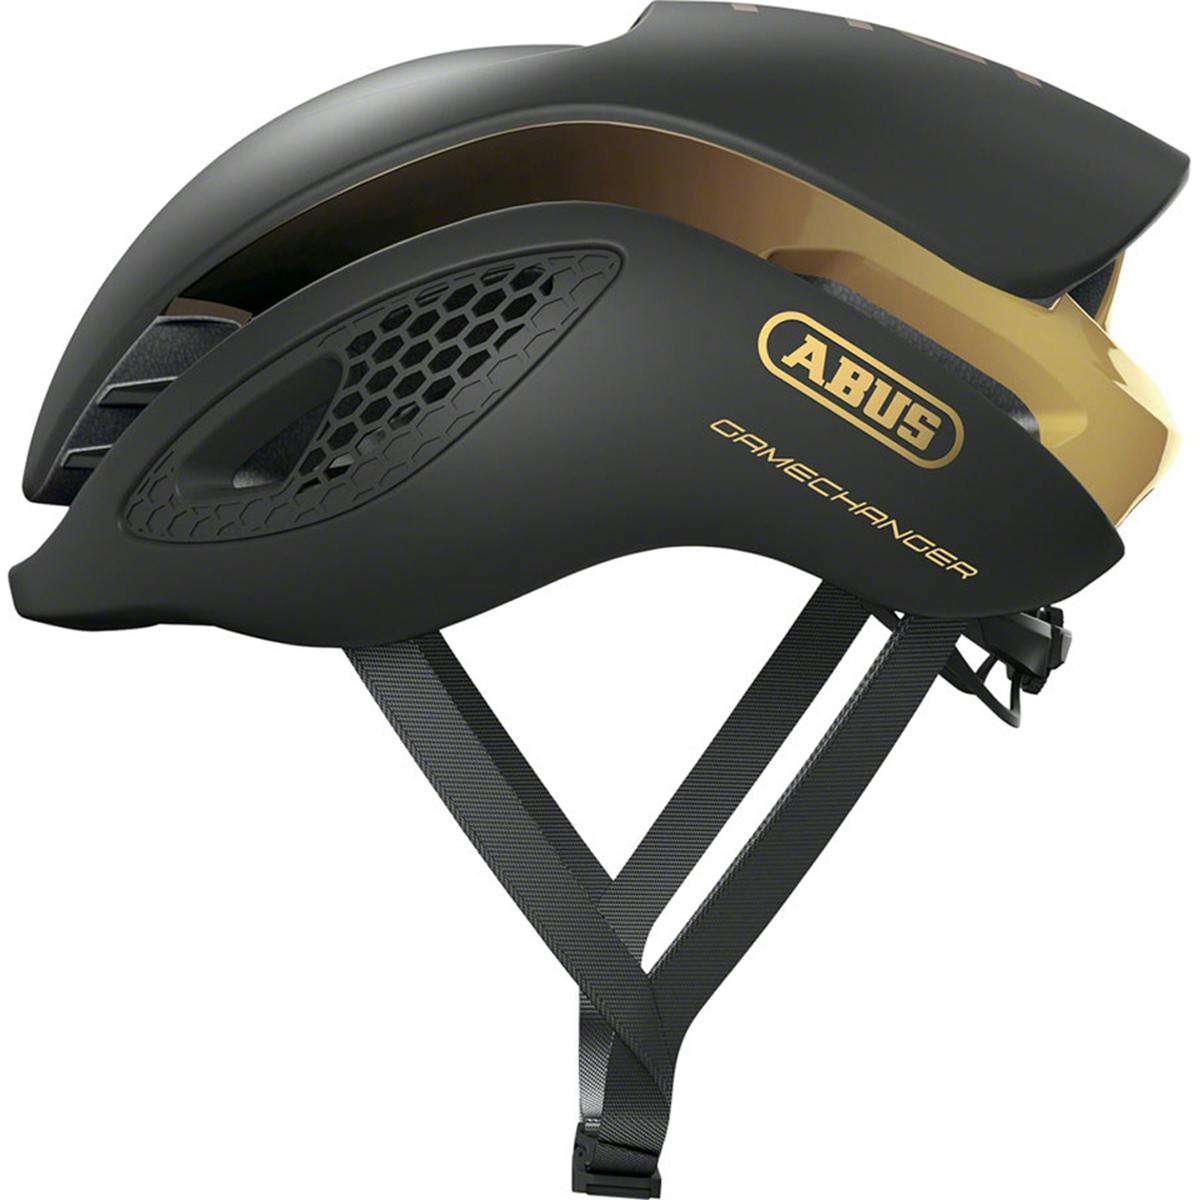 Abus GameChanger Road Helmet Damaged Packaging - Dark Grey - Medium